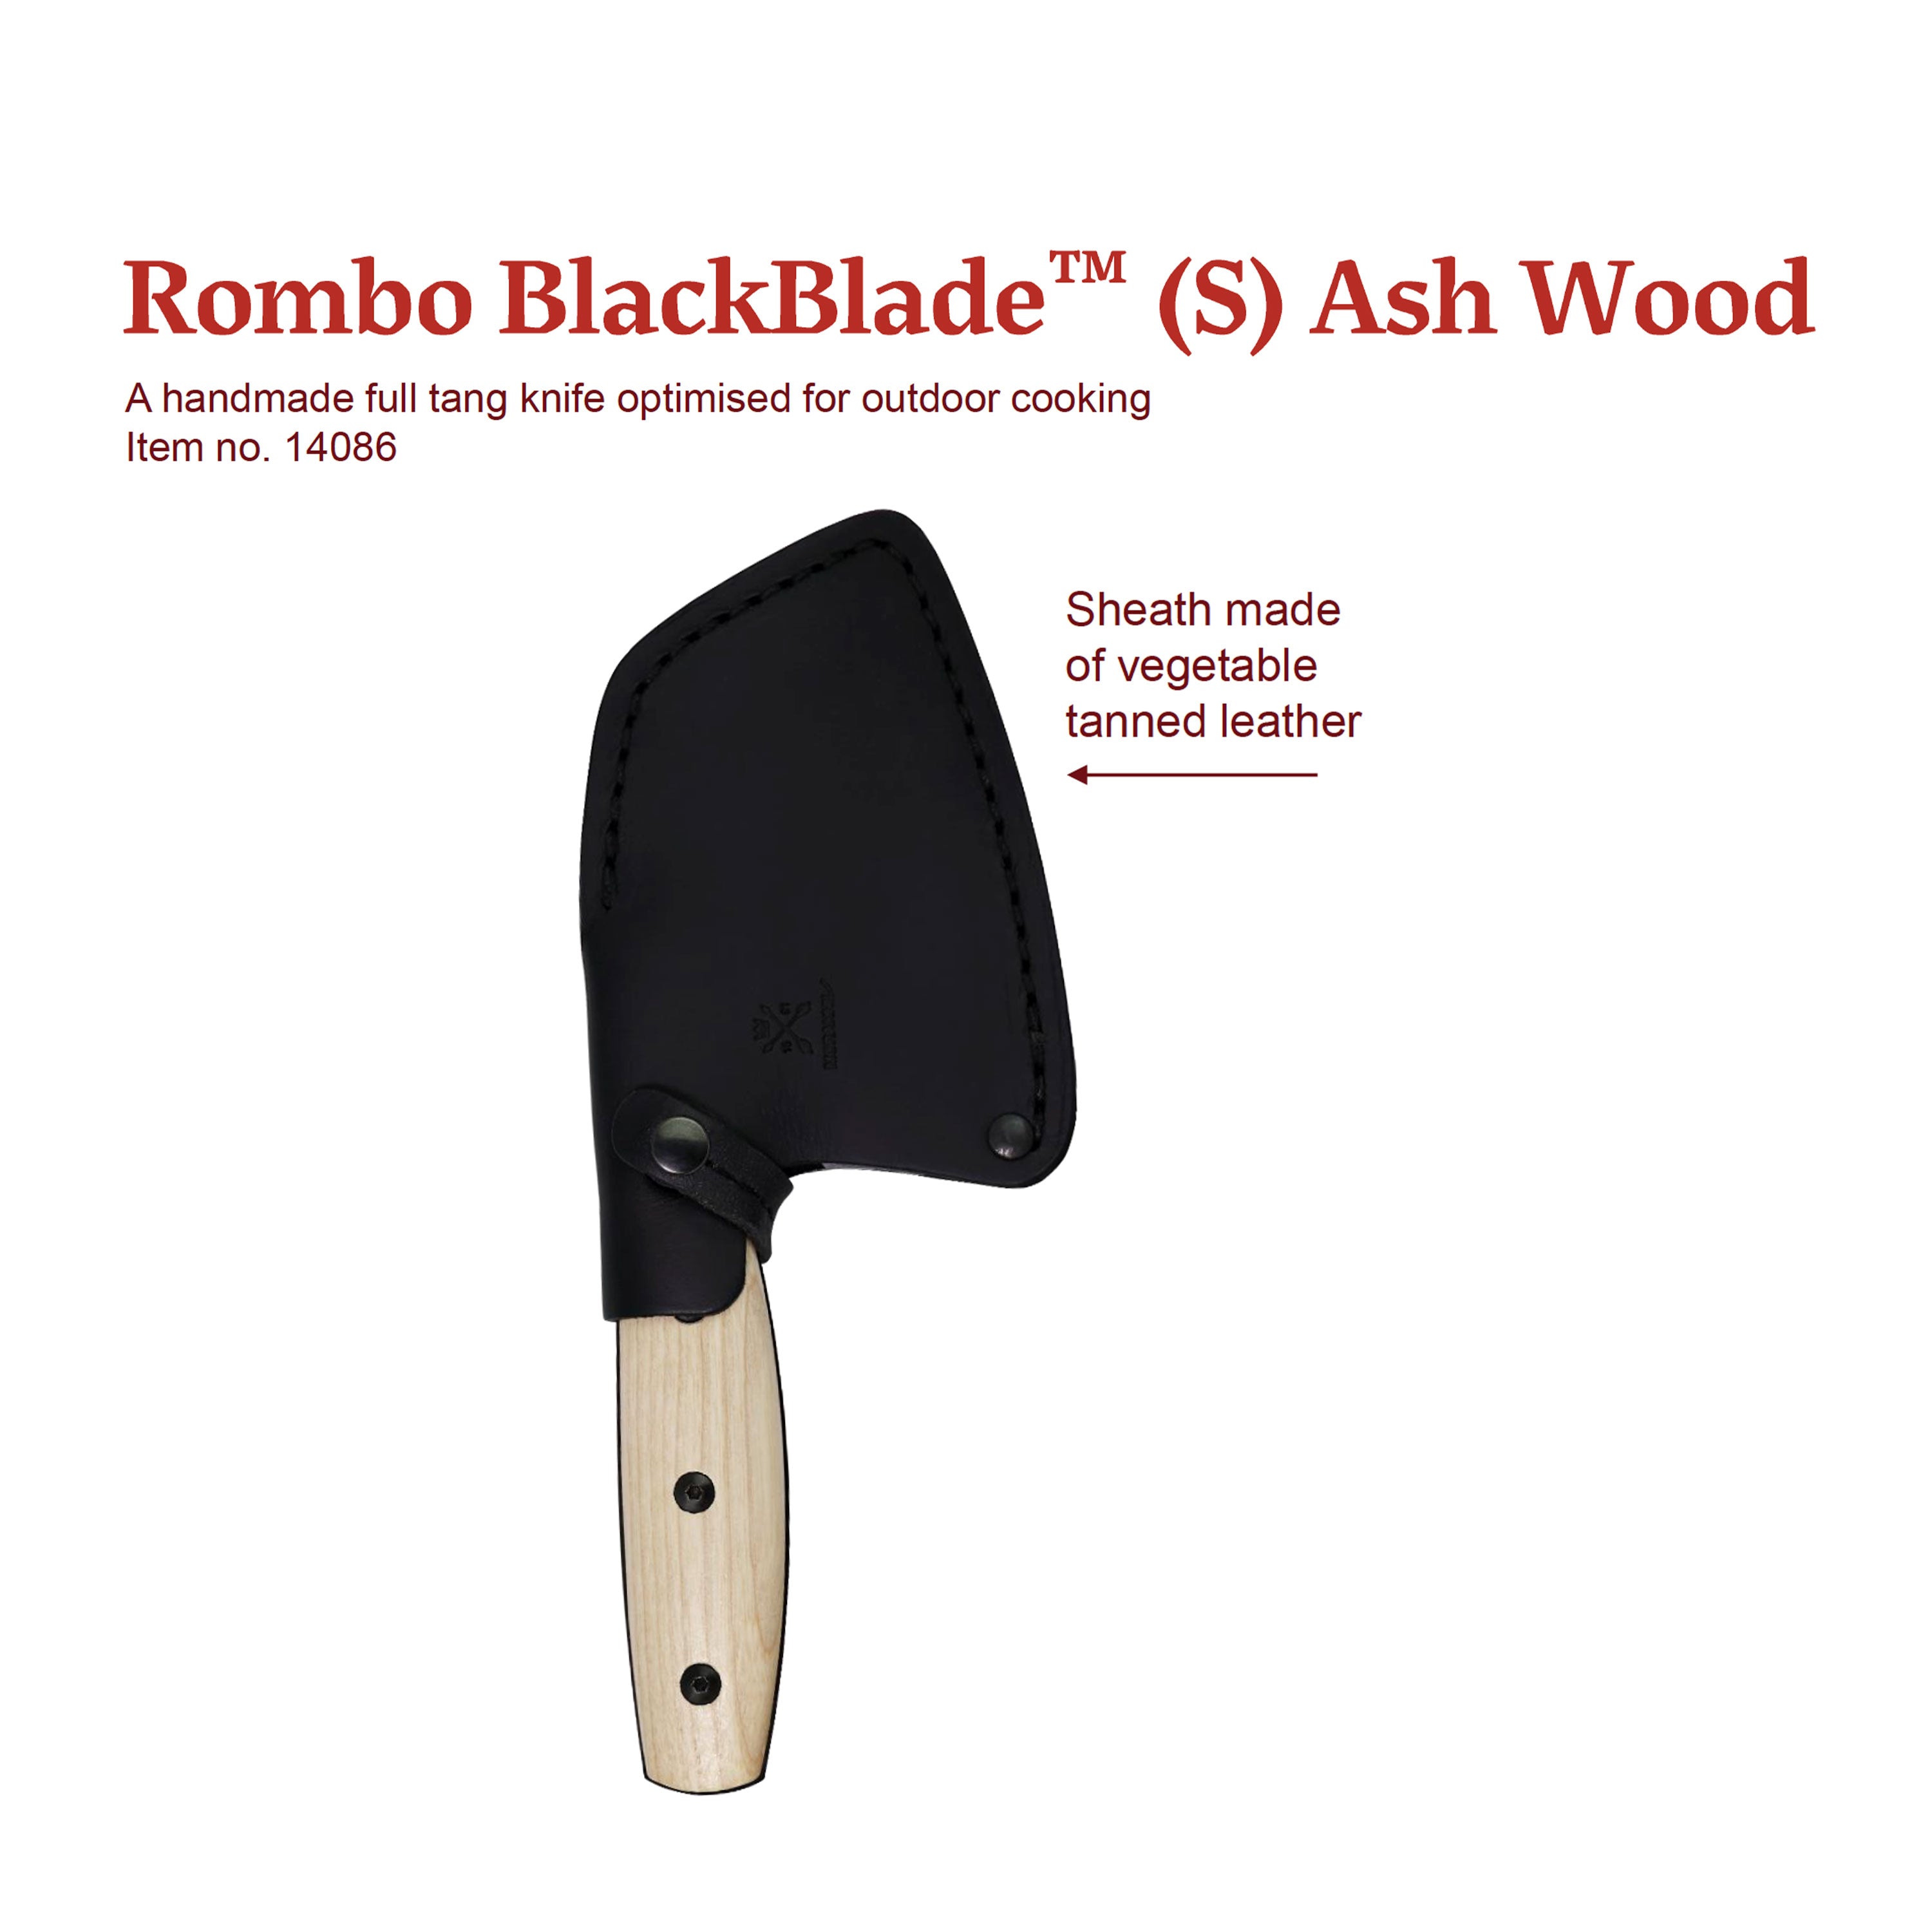 ROMBO Blackblade (S) Ash Wood